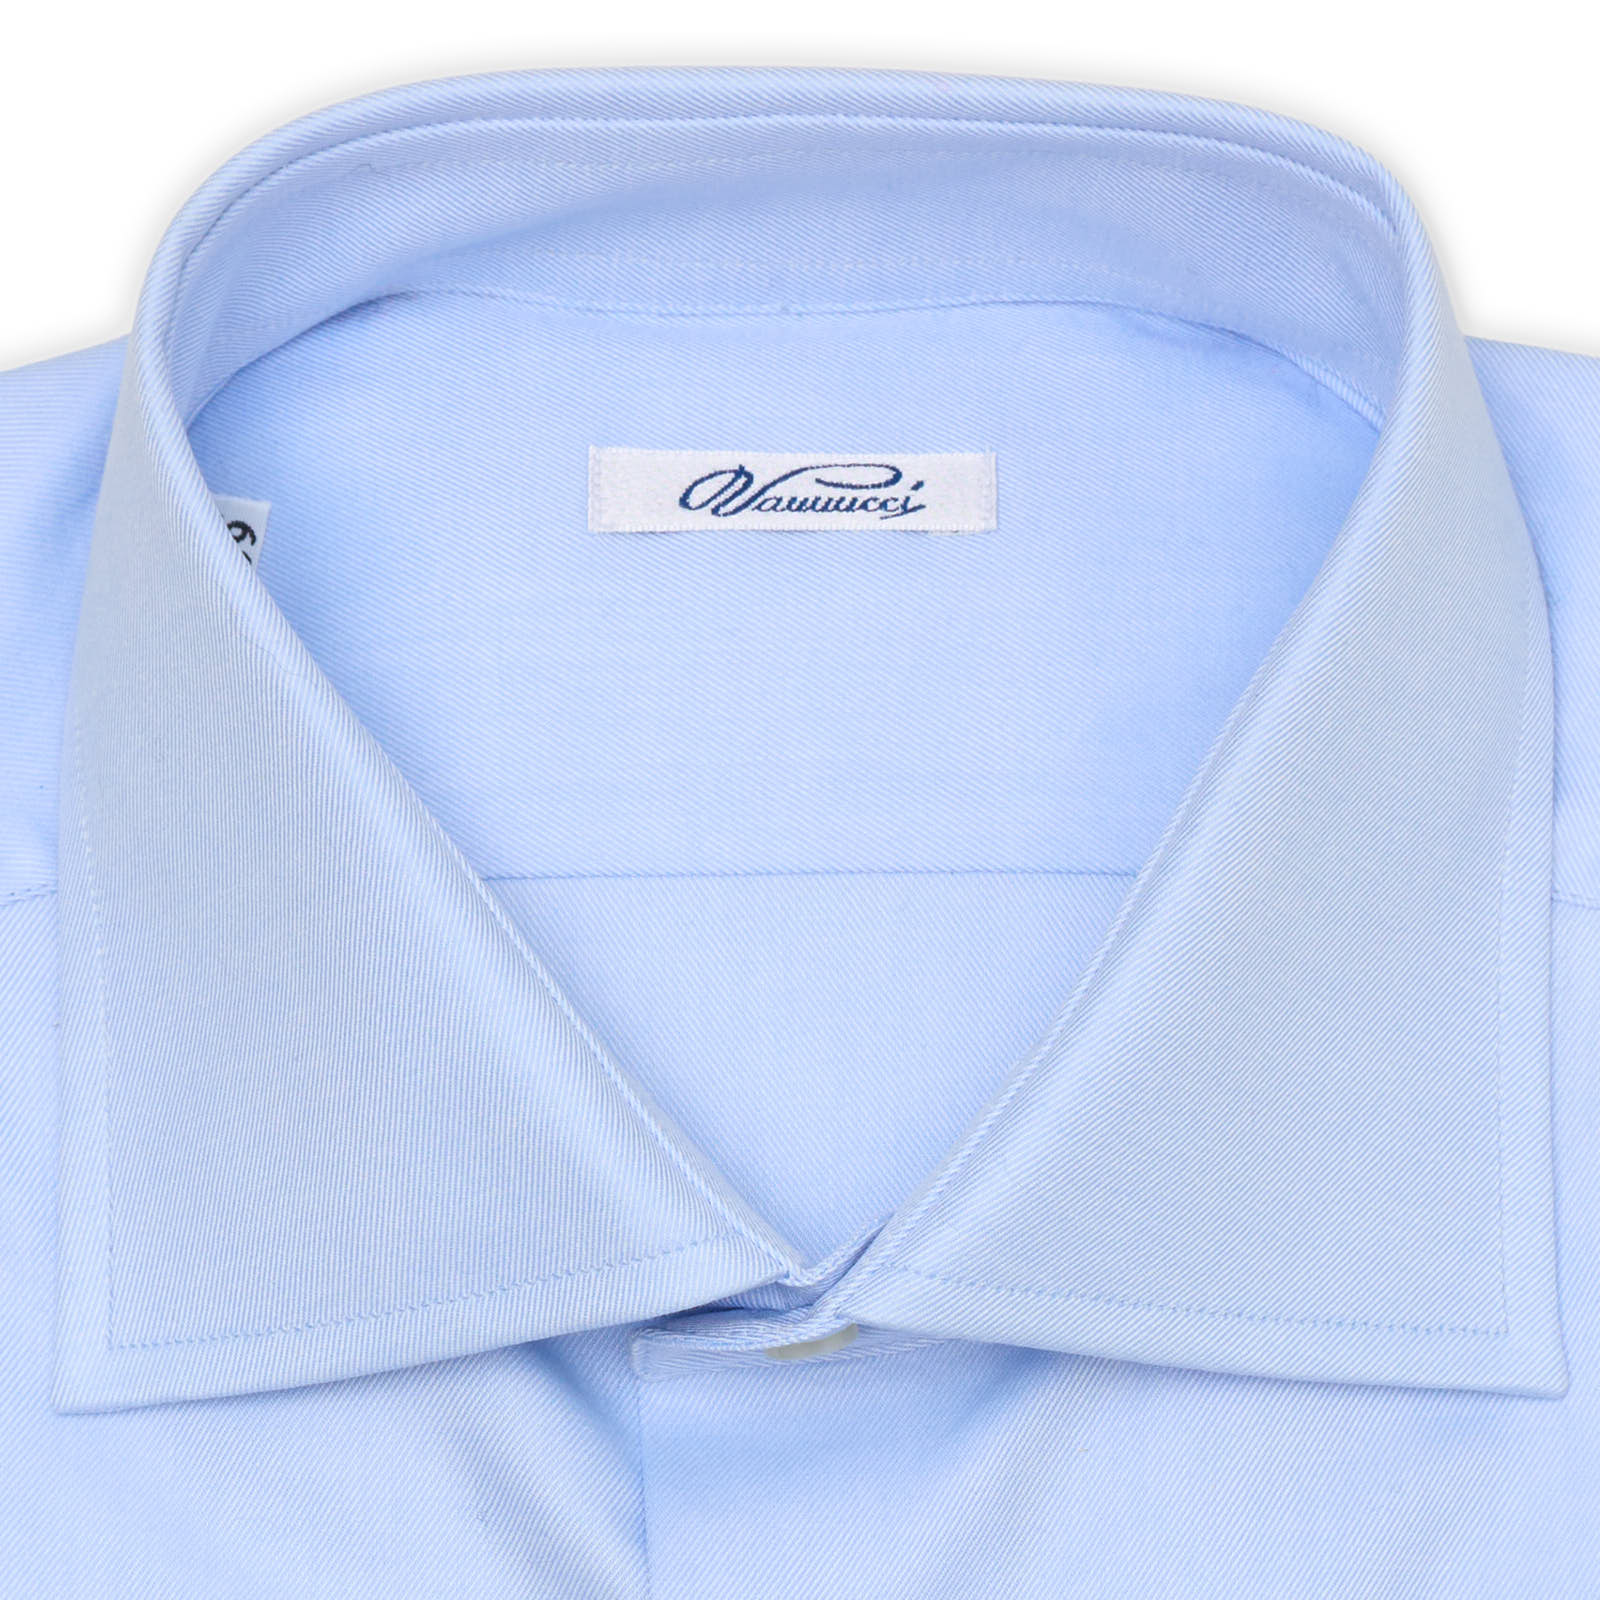 VANNUCCI Milano Blue Twill Cotton French Cuff Dress Shirt EU 39 NEW US 15.5